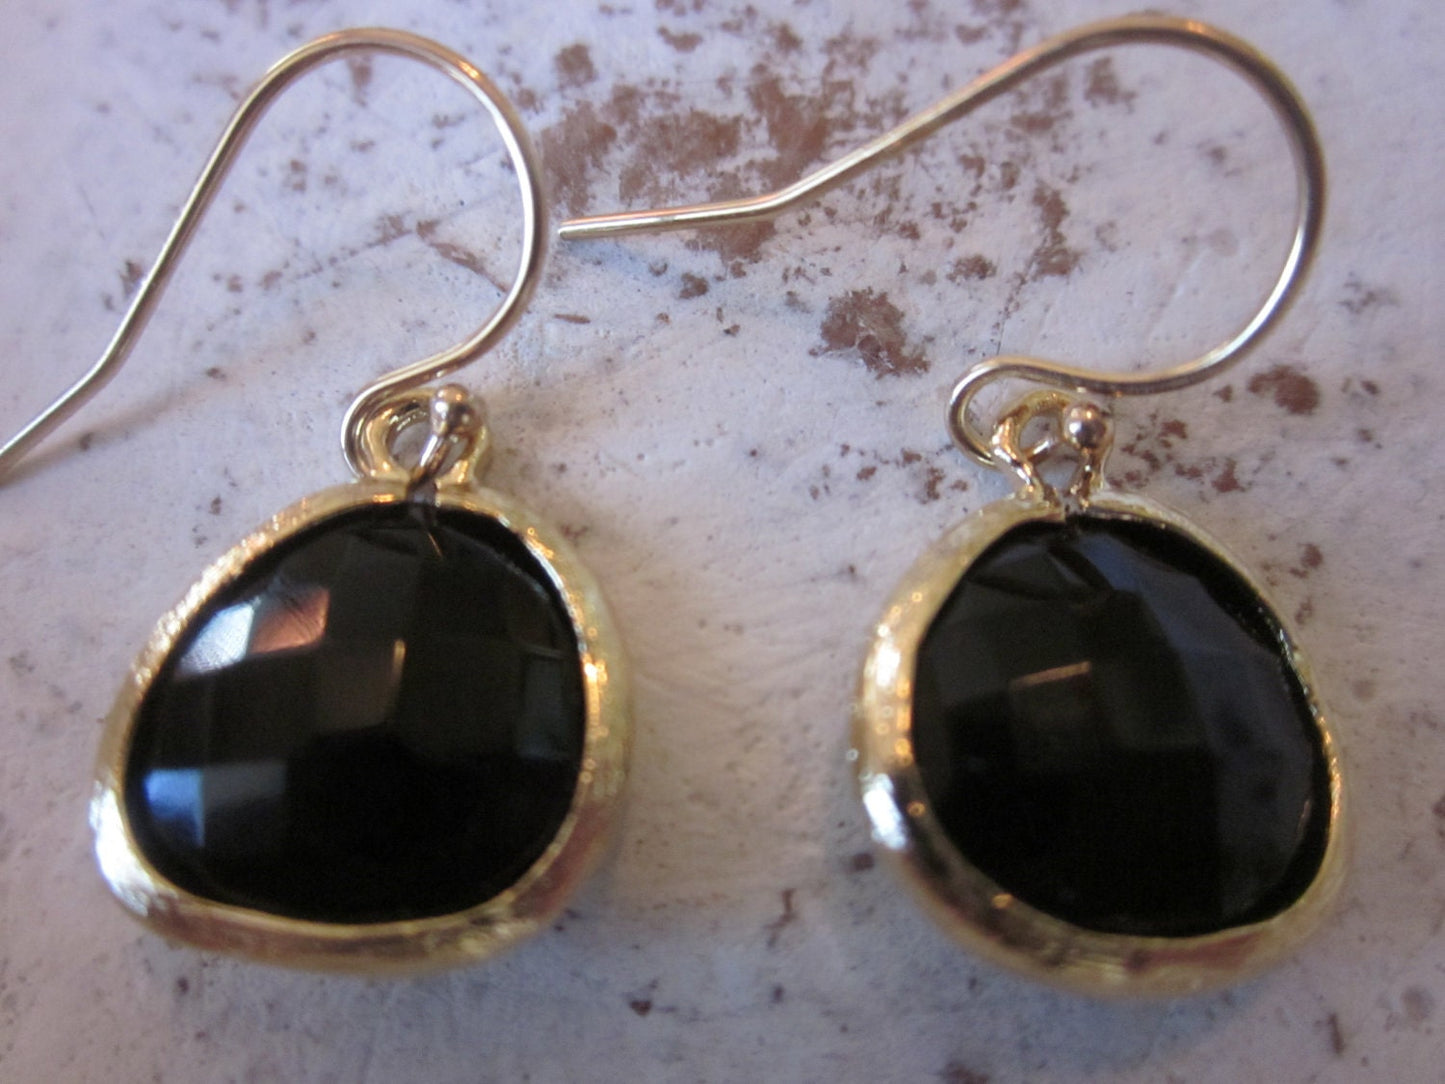 Black Onyx Earrings Gold Plated - Bridesmaid Earrings Wedding Earrings Valentines Day Gift